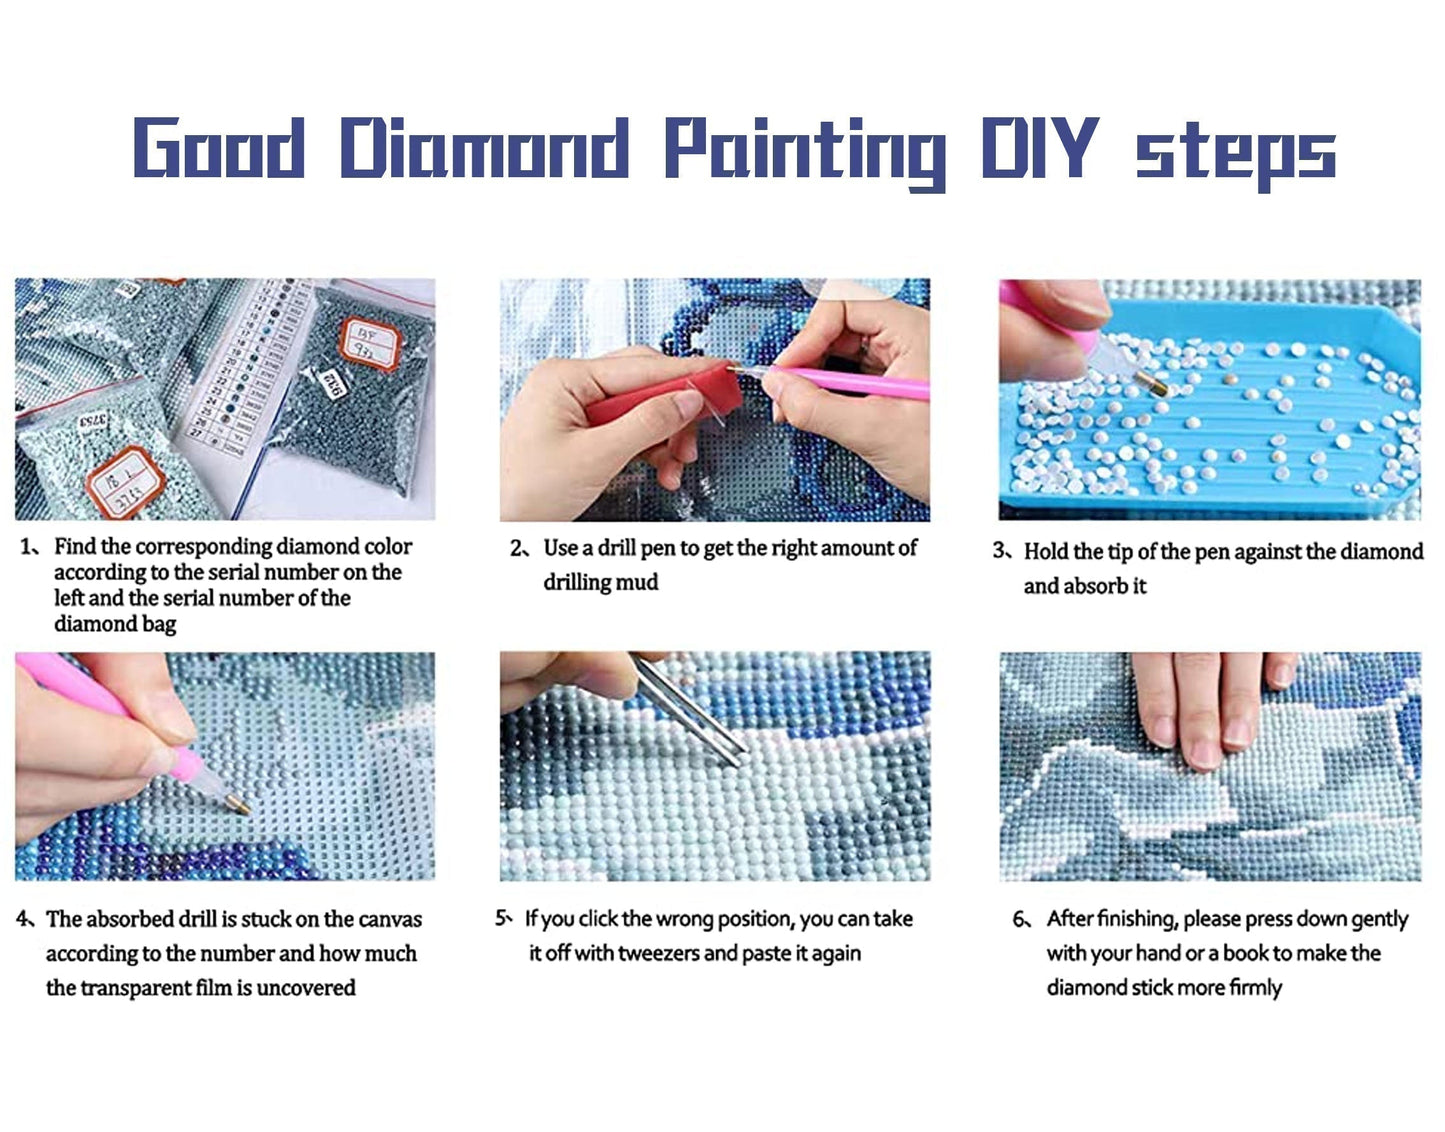 Verhaftet | Vollständige runde/quadratische Diamond Painting Kits